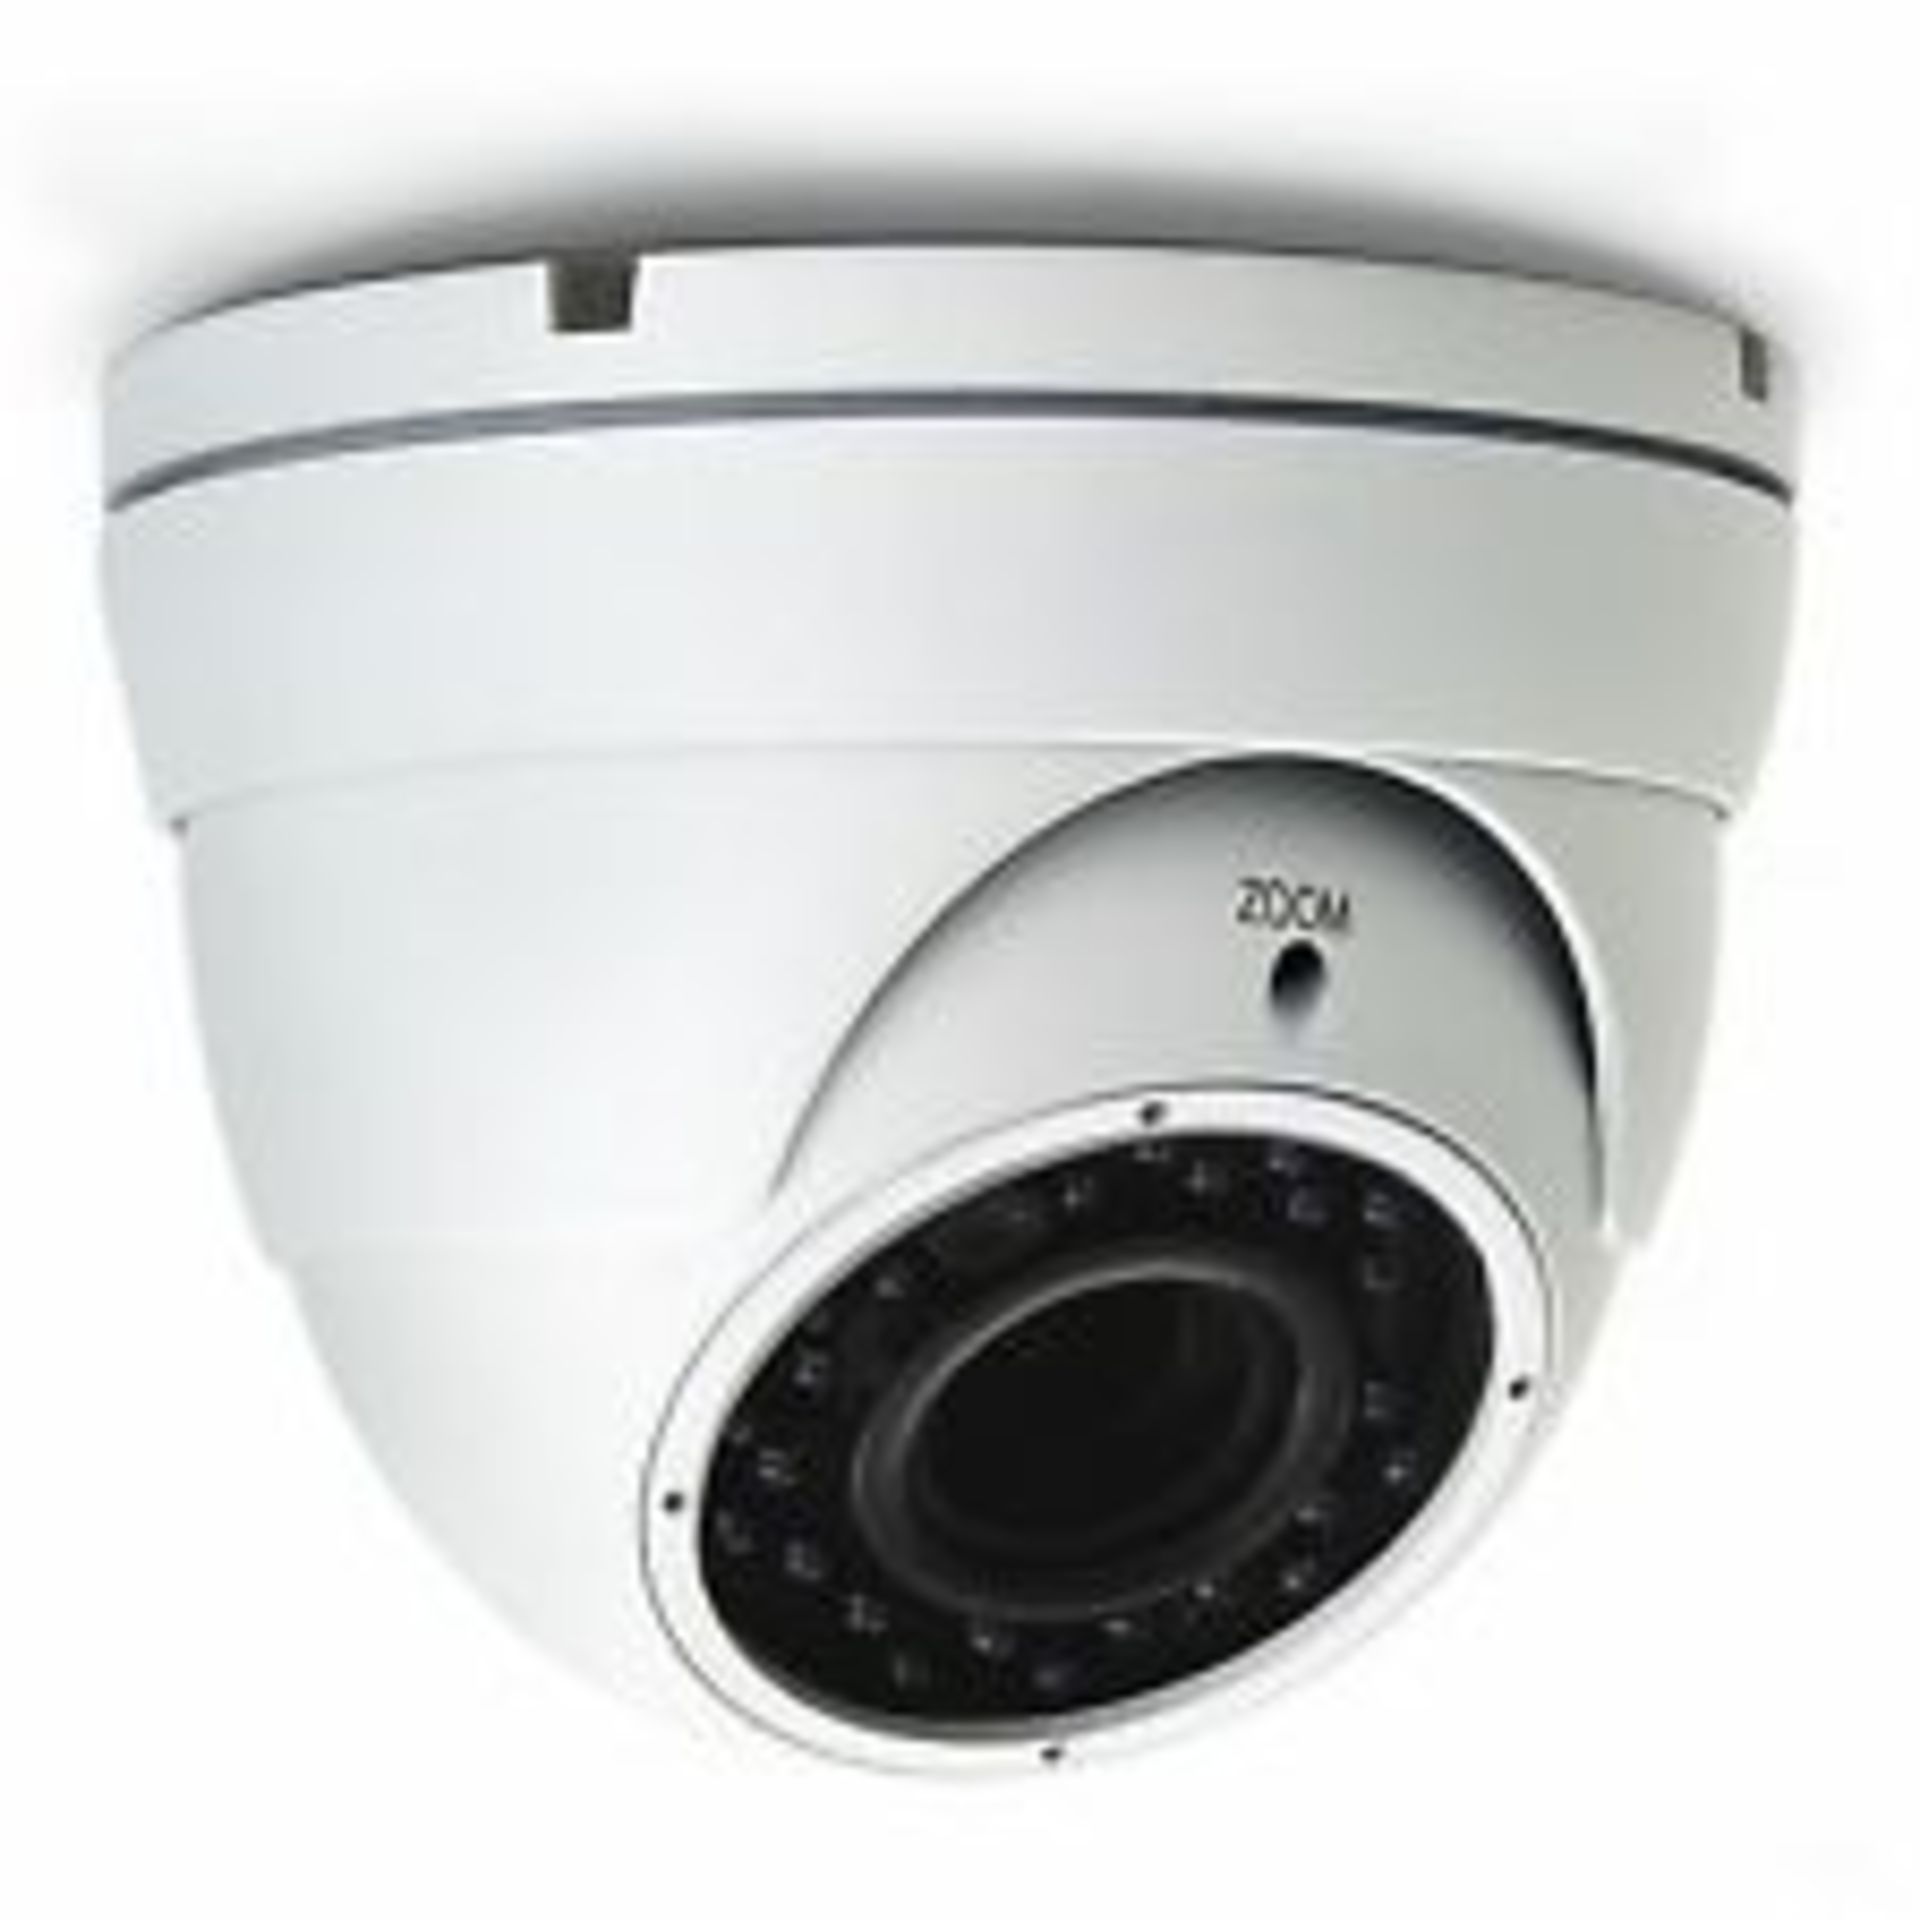 V Brand New Avtech 540TVL Eyeball IR Dome Camera - 1/3" Sony CCD IP65 -White X 2 YOUR BID PRICE TO